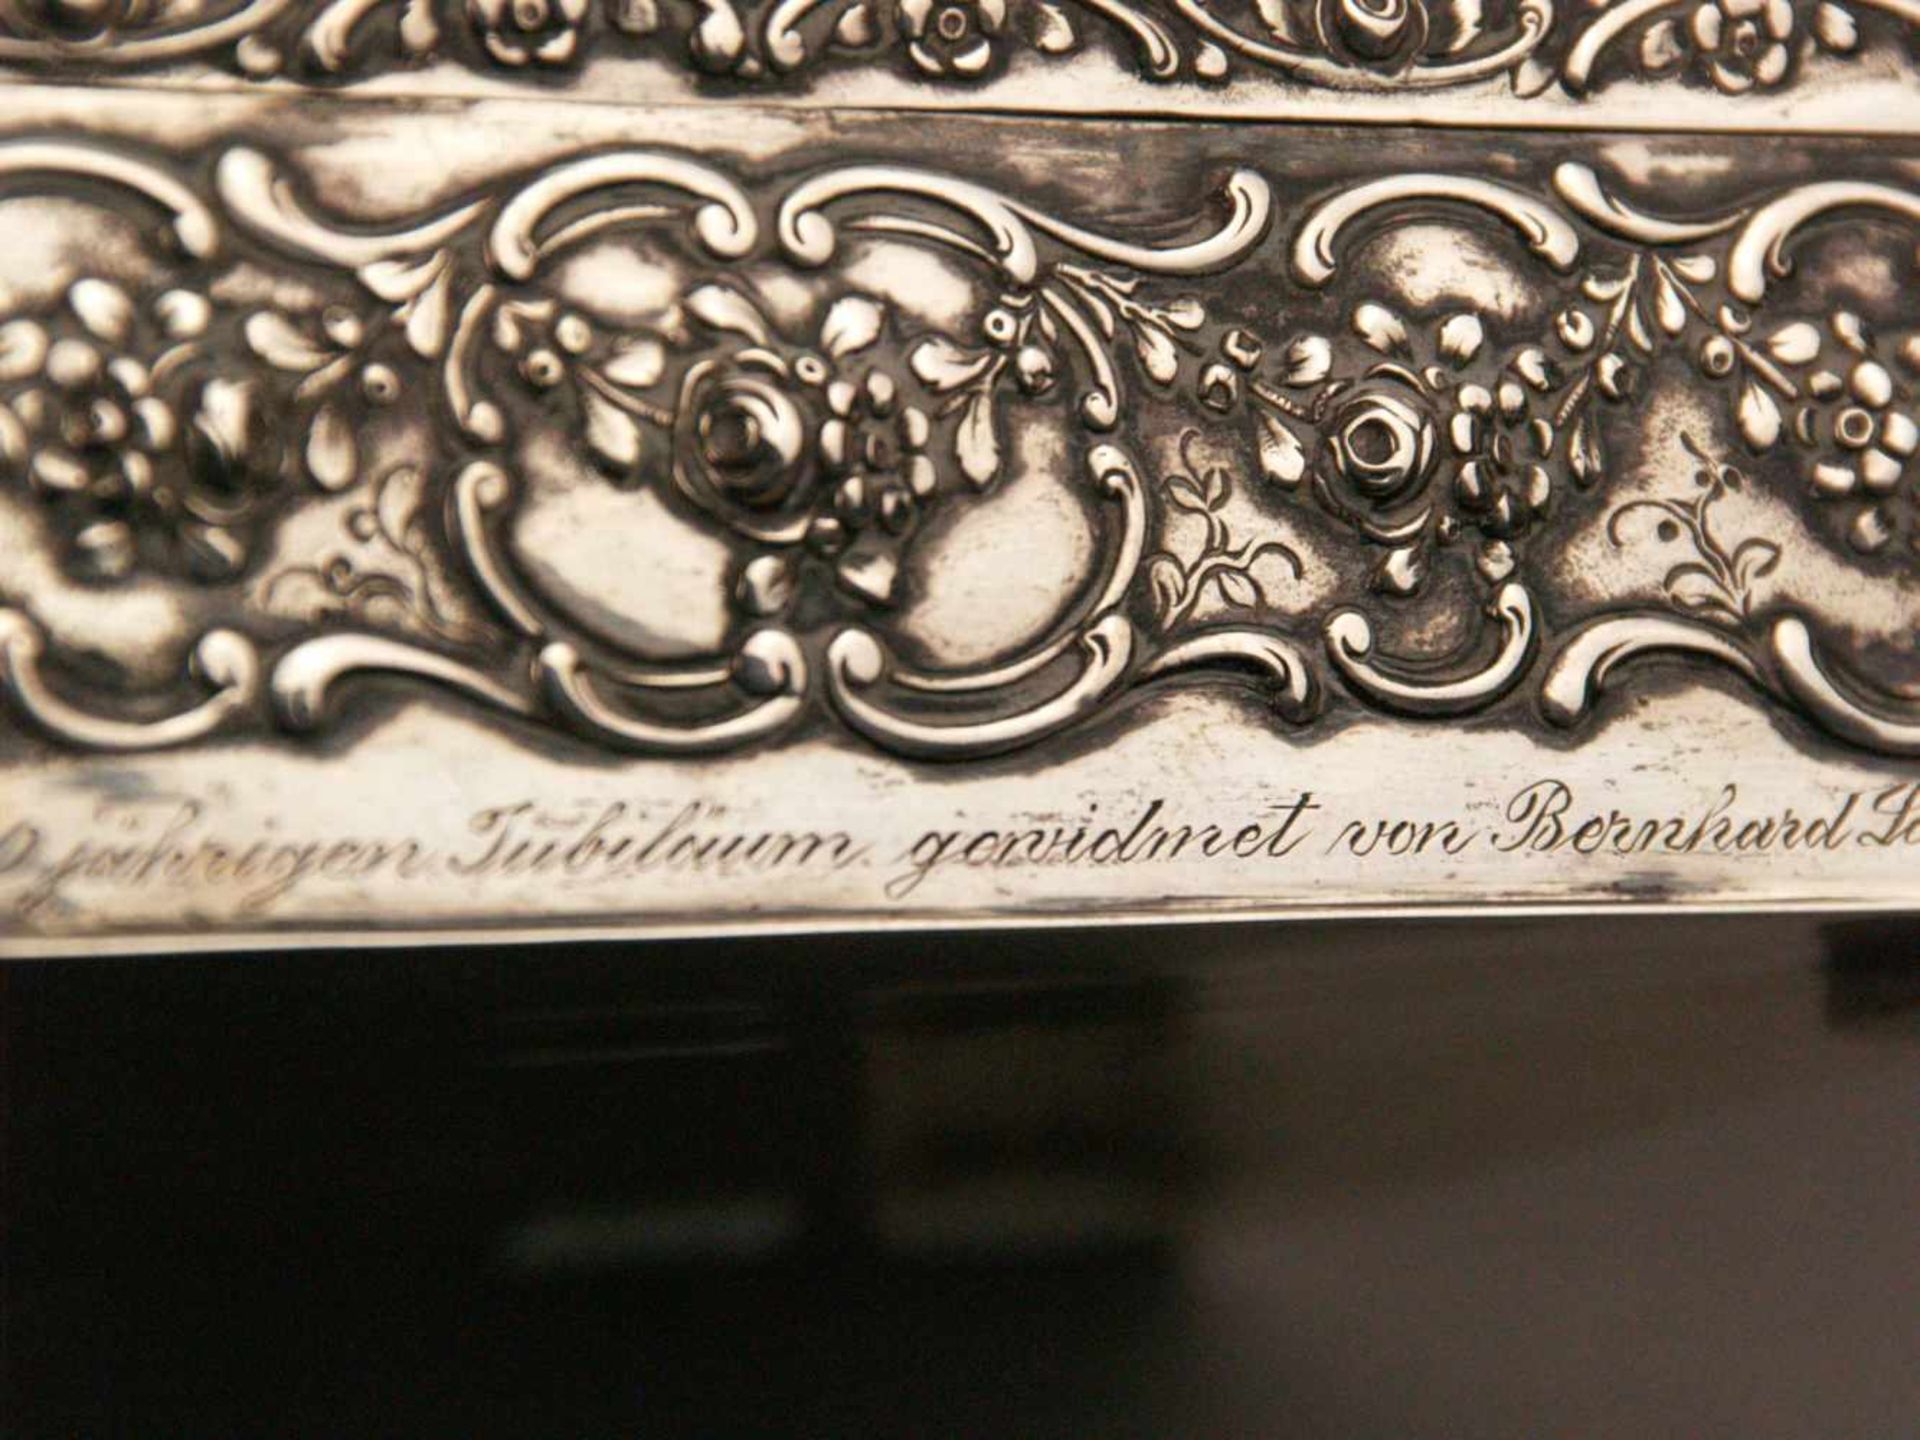 Zigarrenbox mit Raucherutensilien - 4-tlg.: 1x rechteckige Box, 800er Silber, getrieben, flacher - Bild 5 aus 8